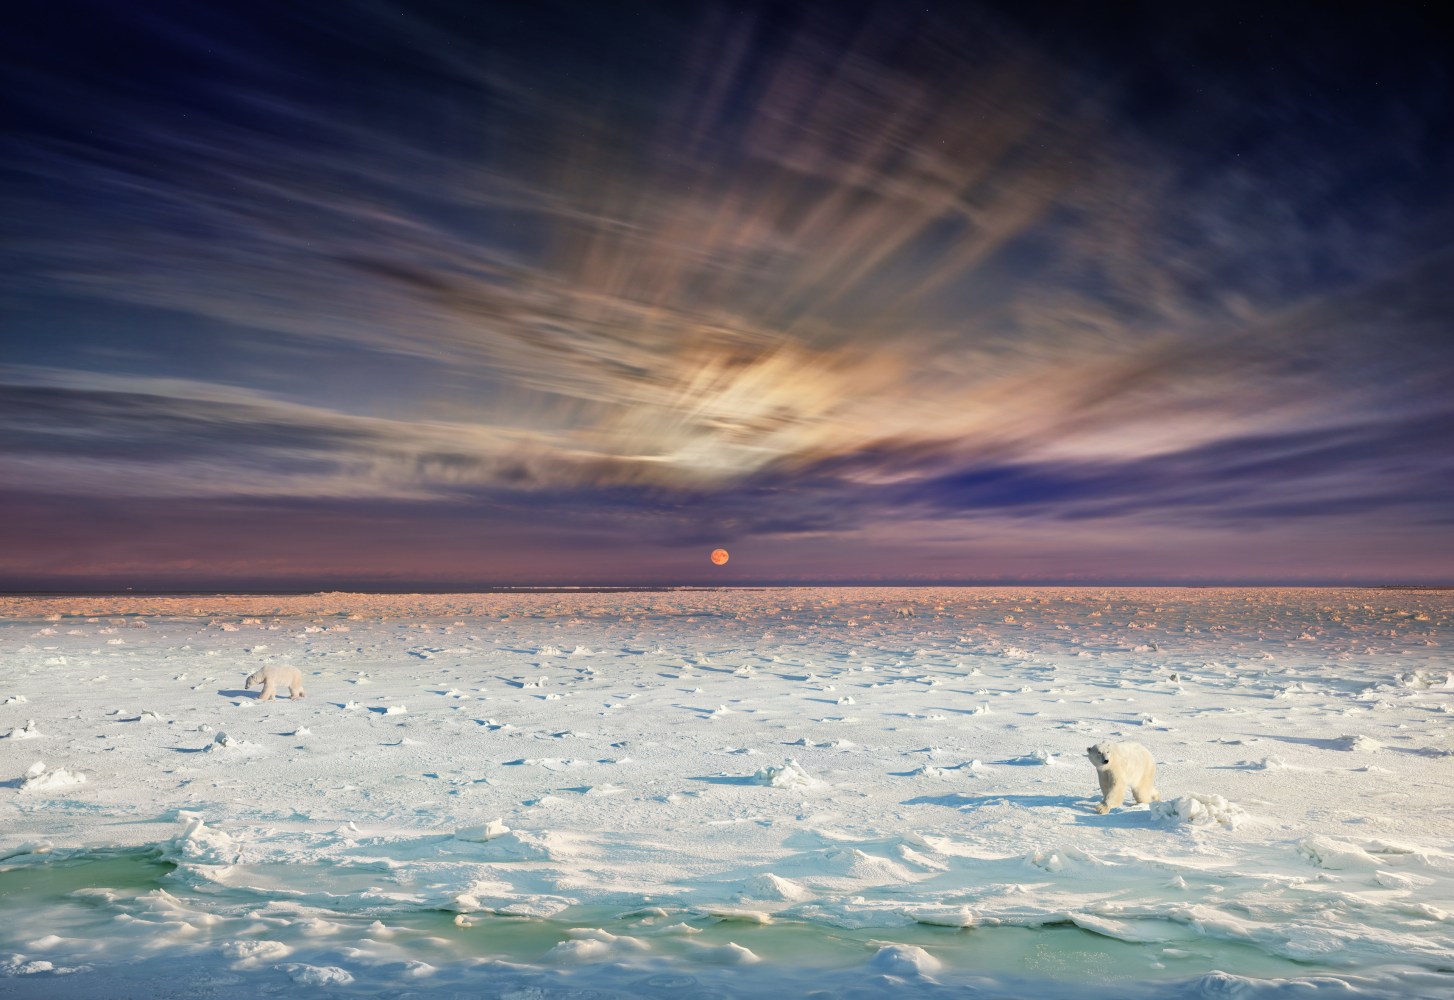 Stephen Wilkes, Polar Bears, Churchill, Manitoba, Canada Day to Night, 2019